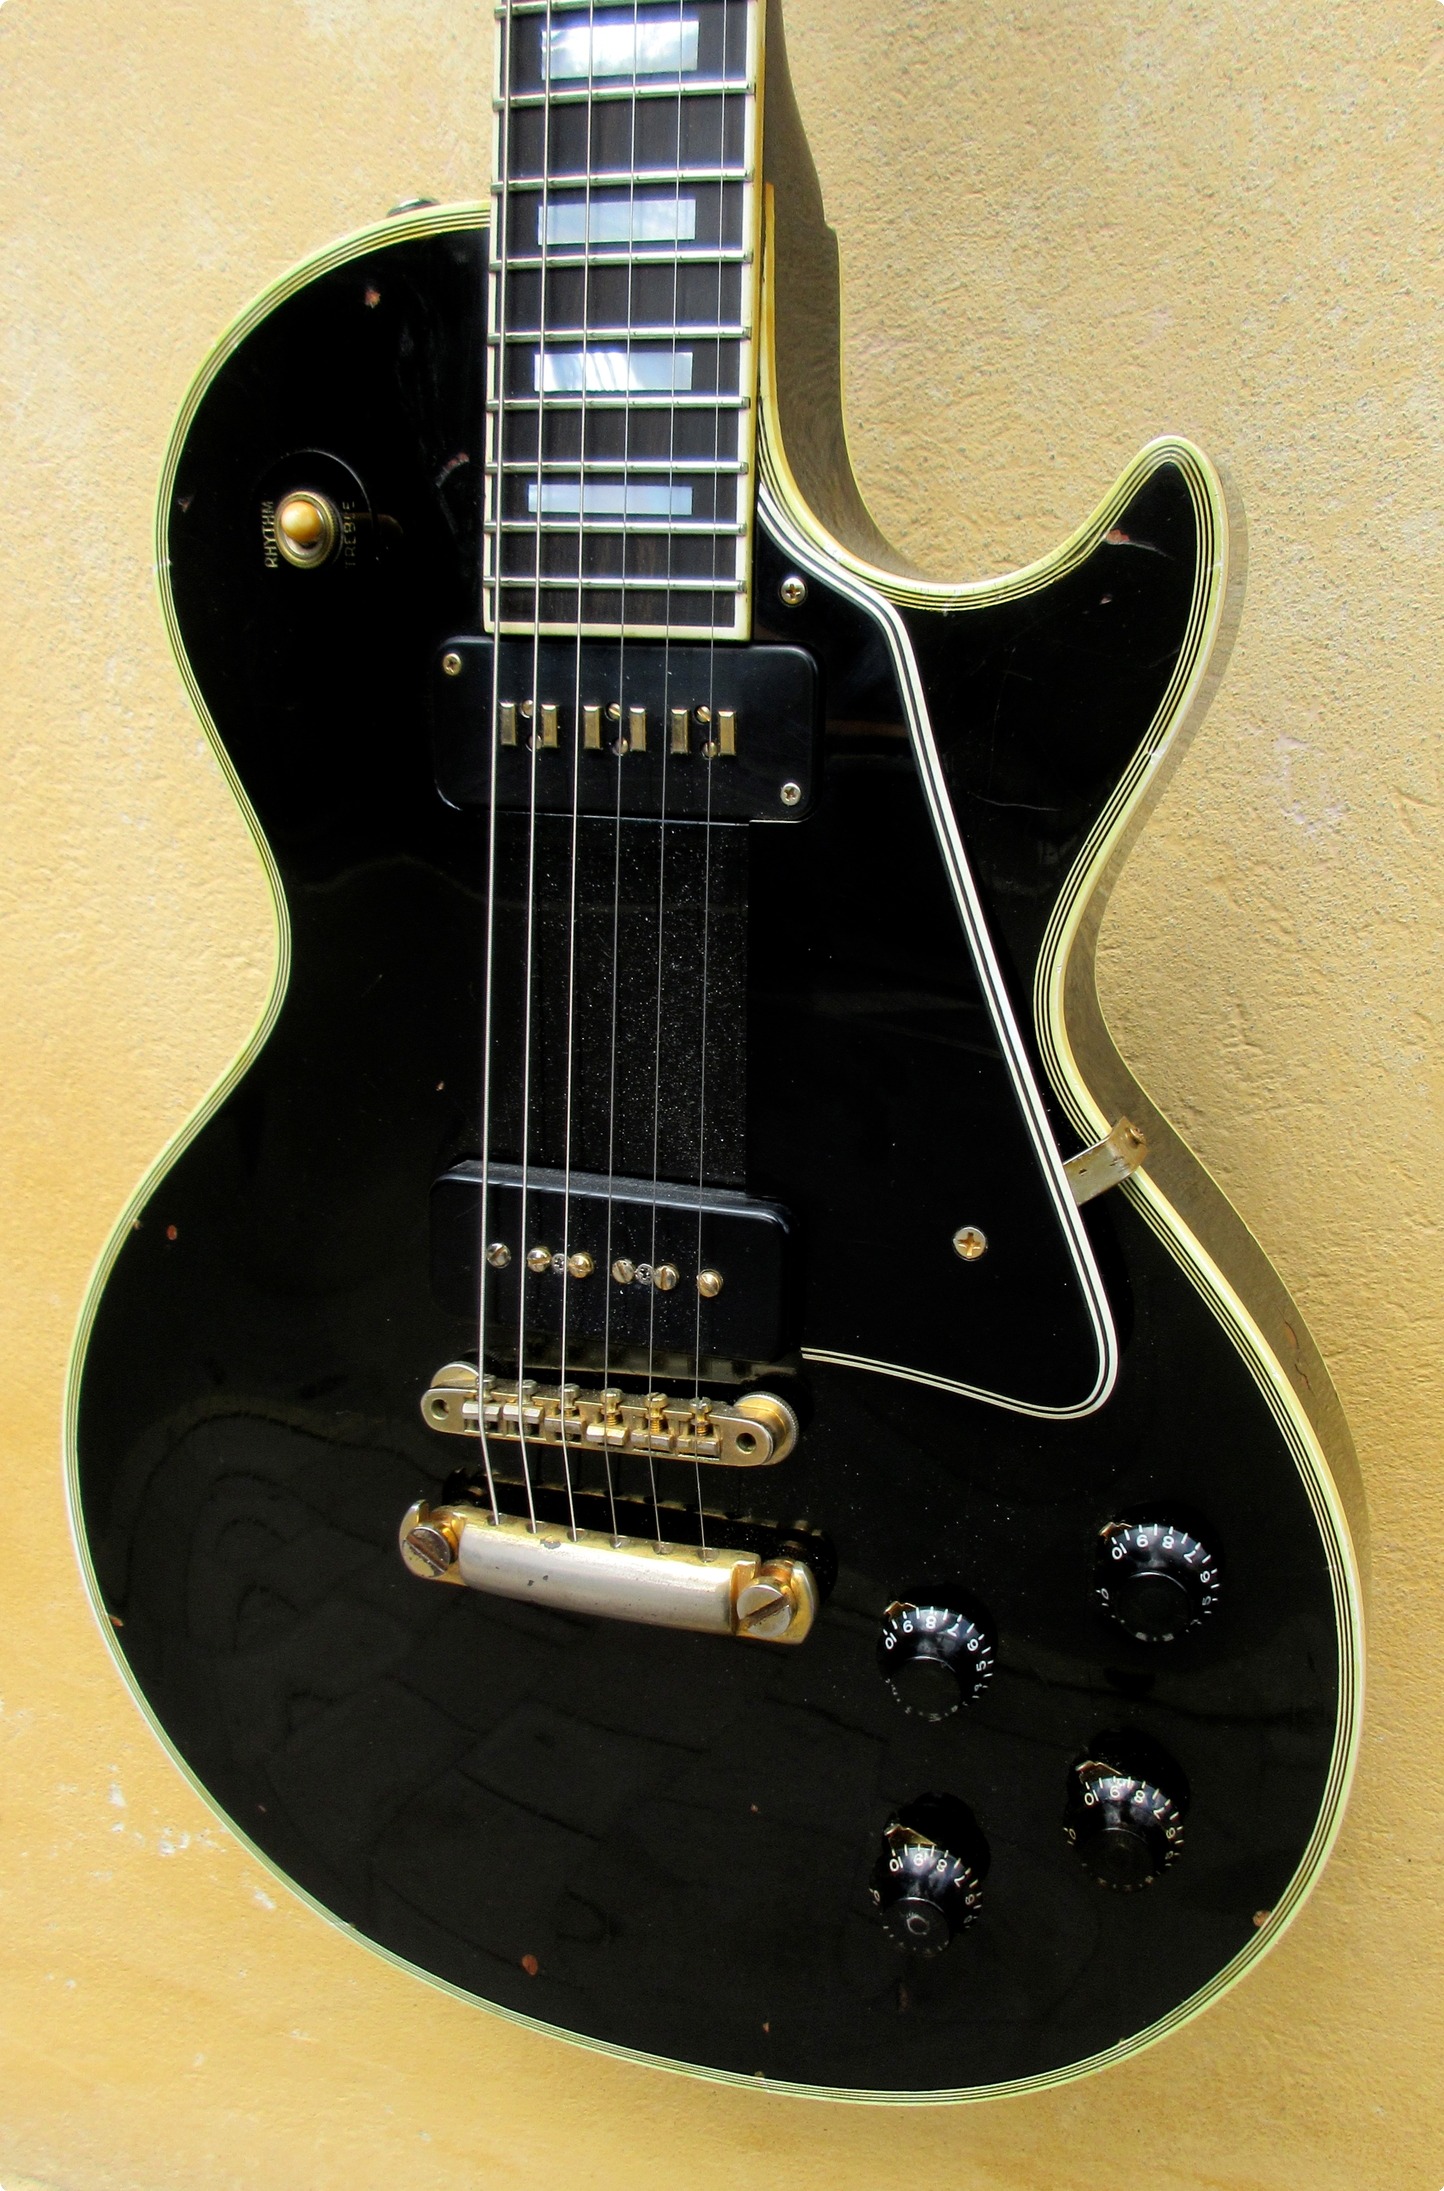 Gibson Les Paul Custom Black Beauty Black Guitar For Sale Halkans Rockhouse